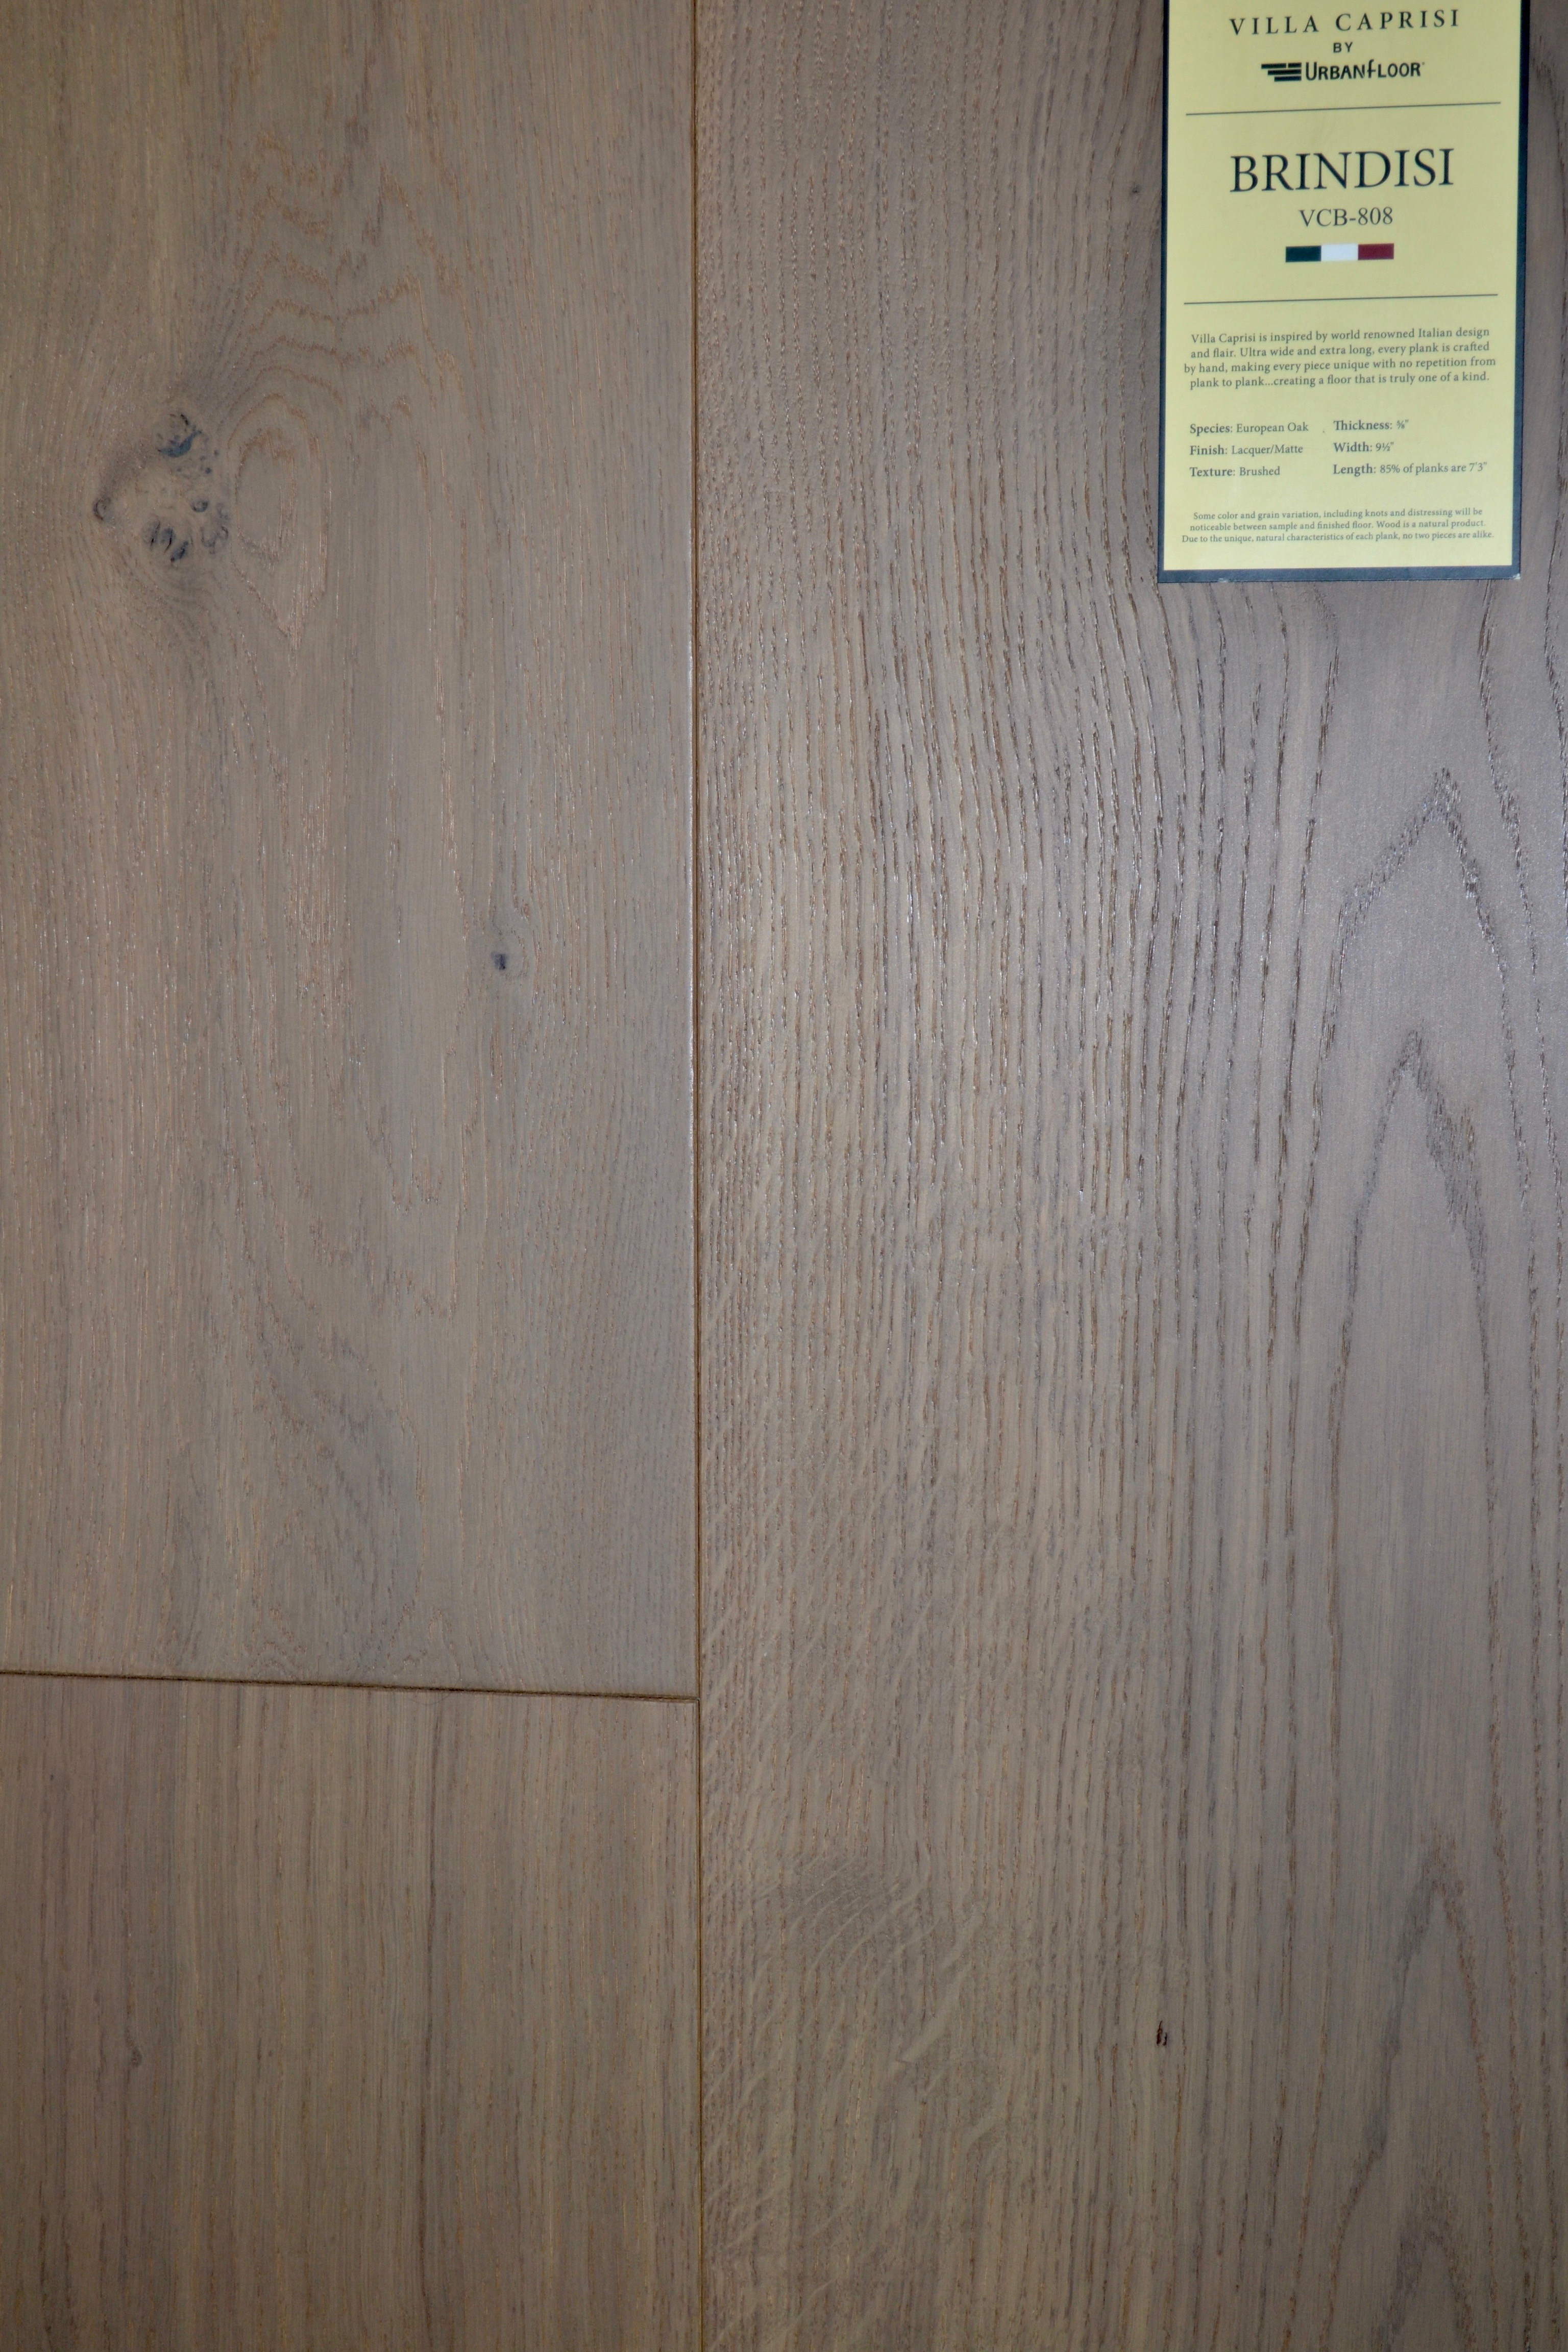 warm hardwood floor colors of villa caprisi fine european hardwood millennium hardwood with european style inspired designer oak floor brindisi by villa caprisi